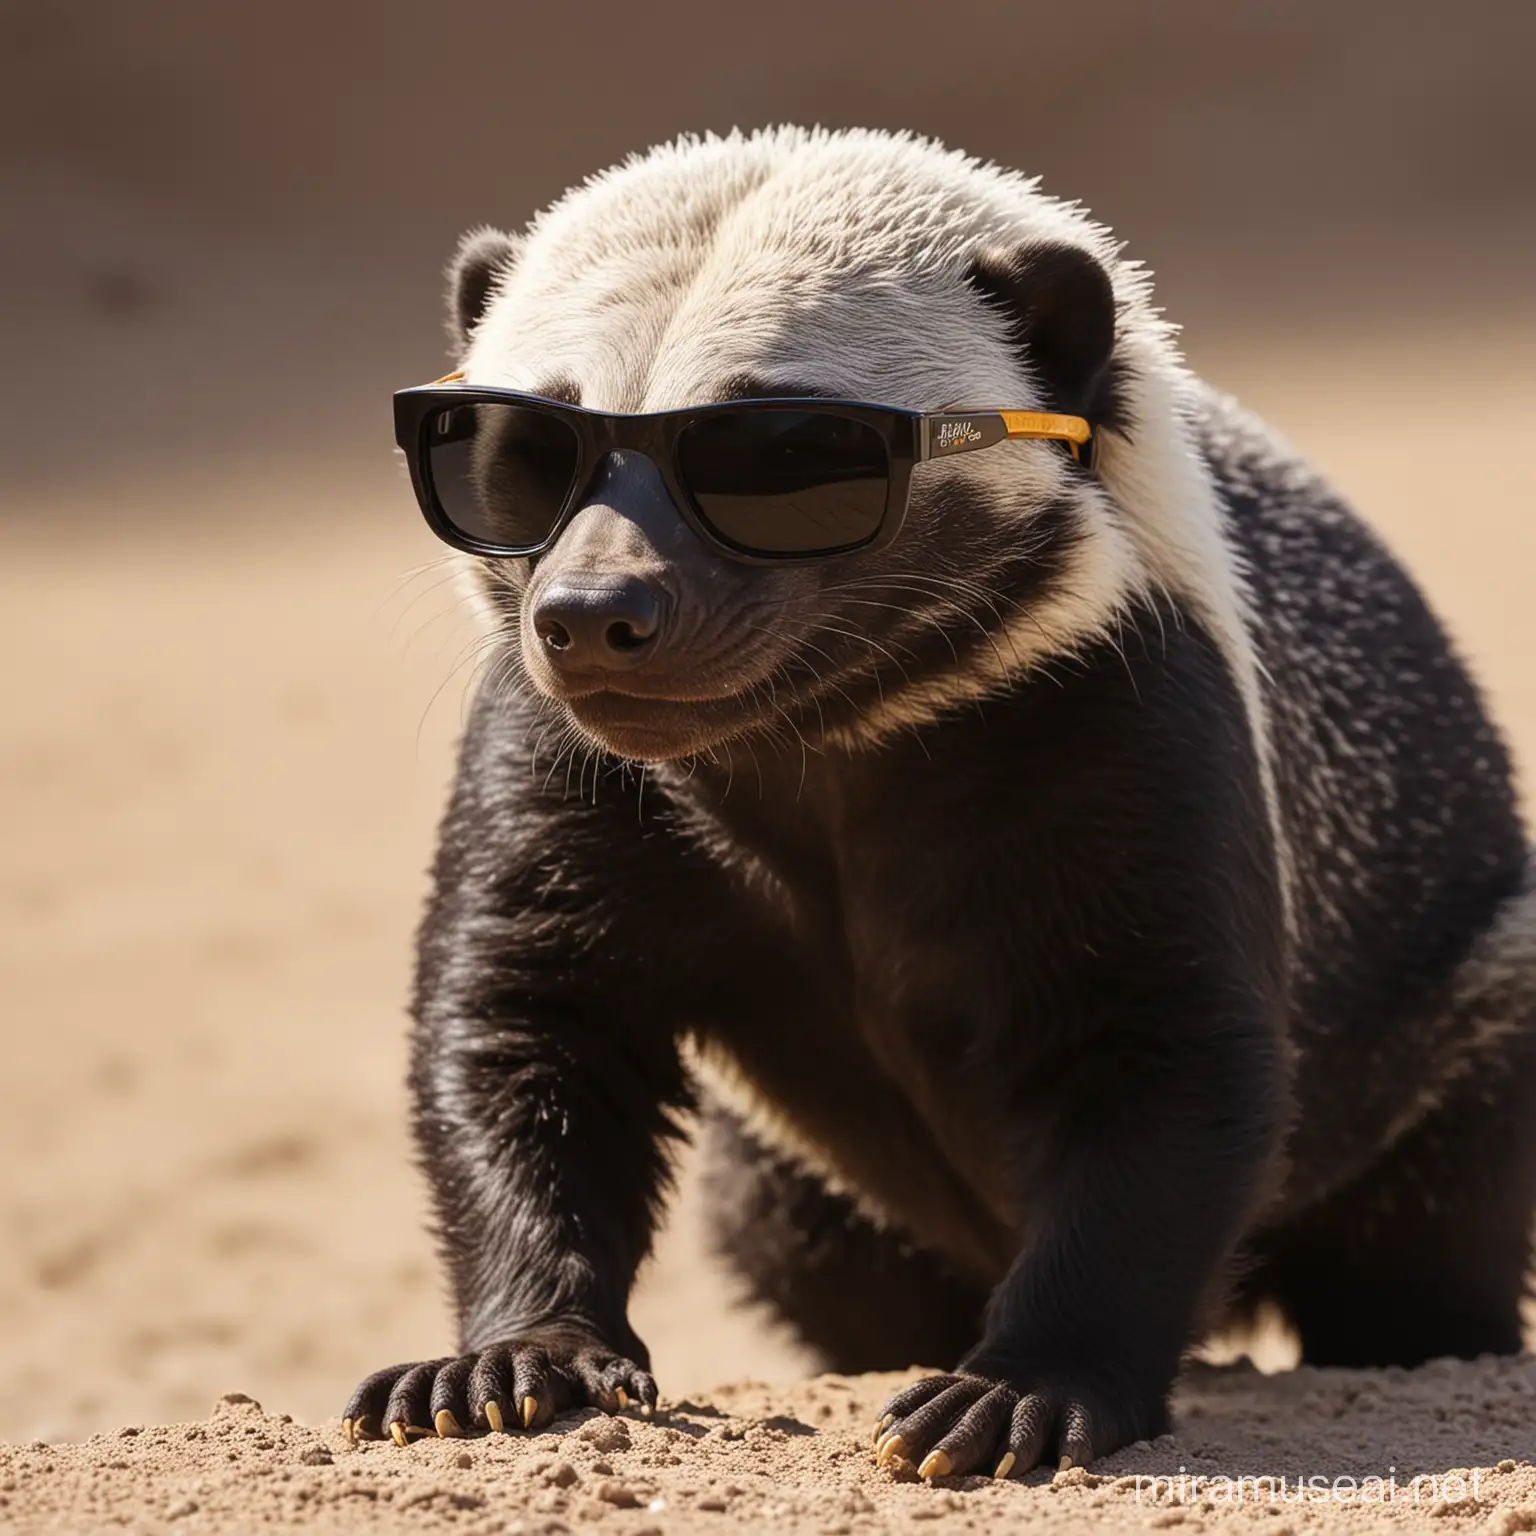 Cool Honey Badger Wearing Sunglasses